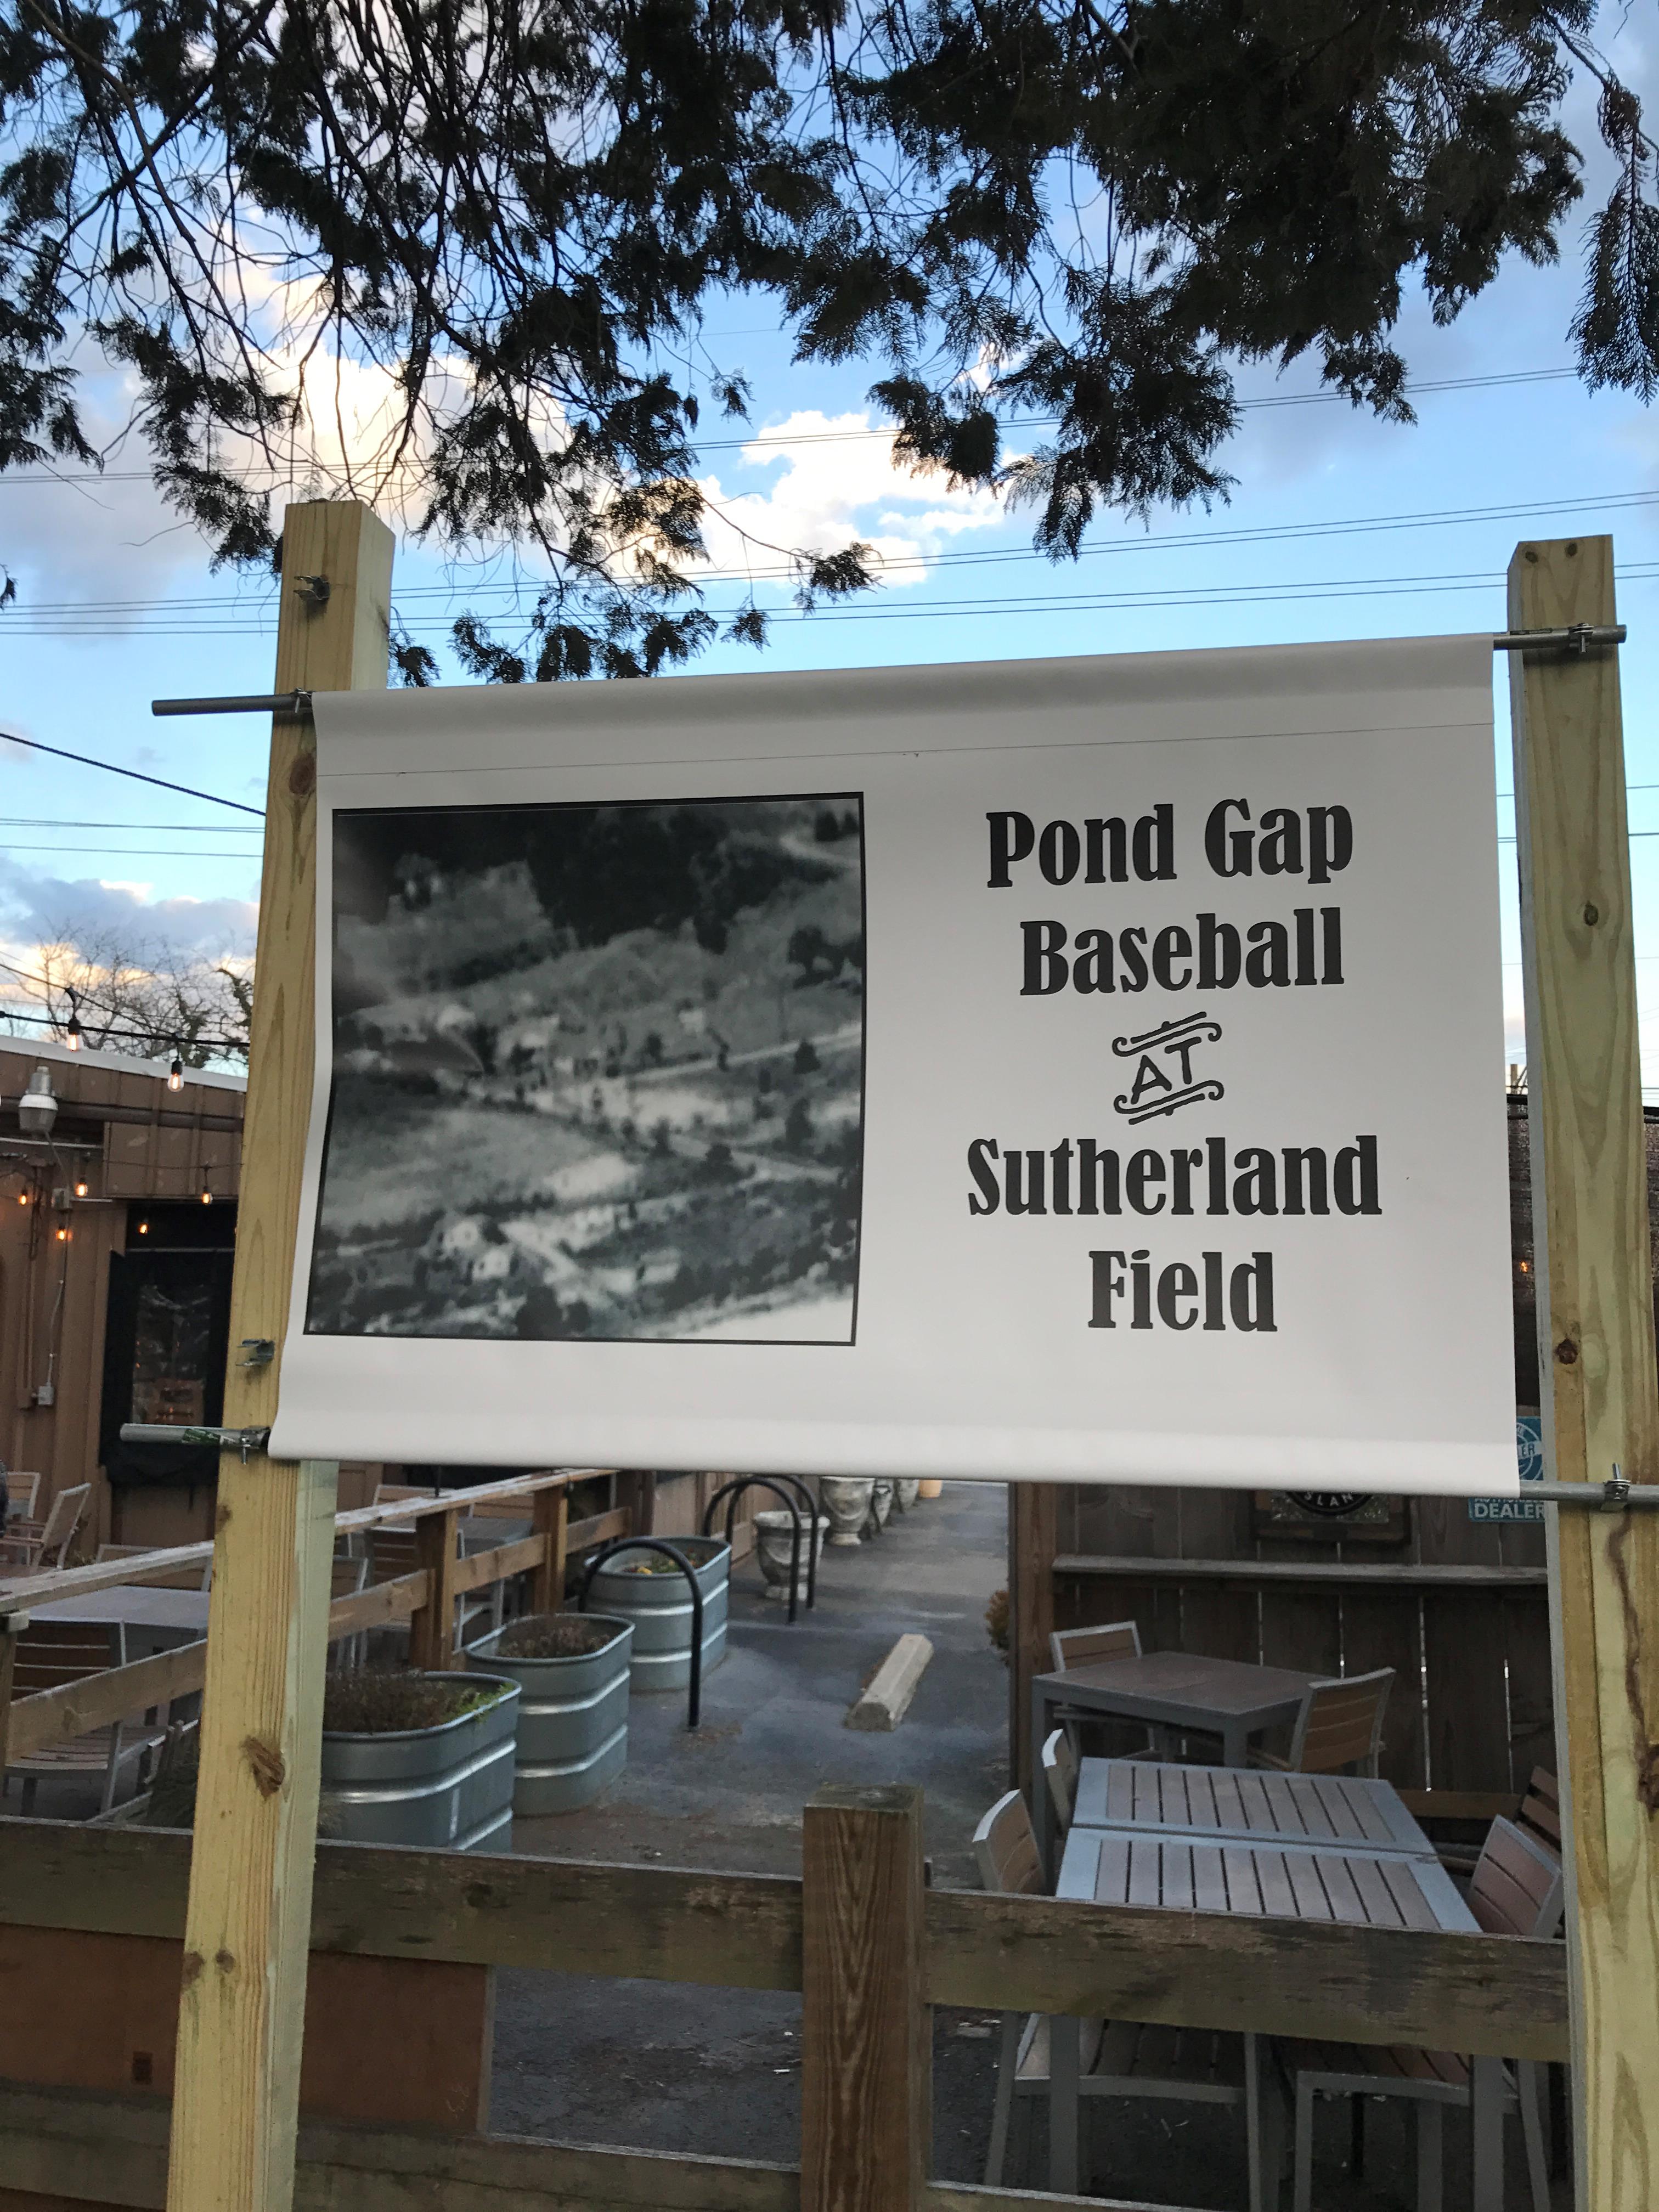 fastsigns honoring sutherland field